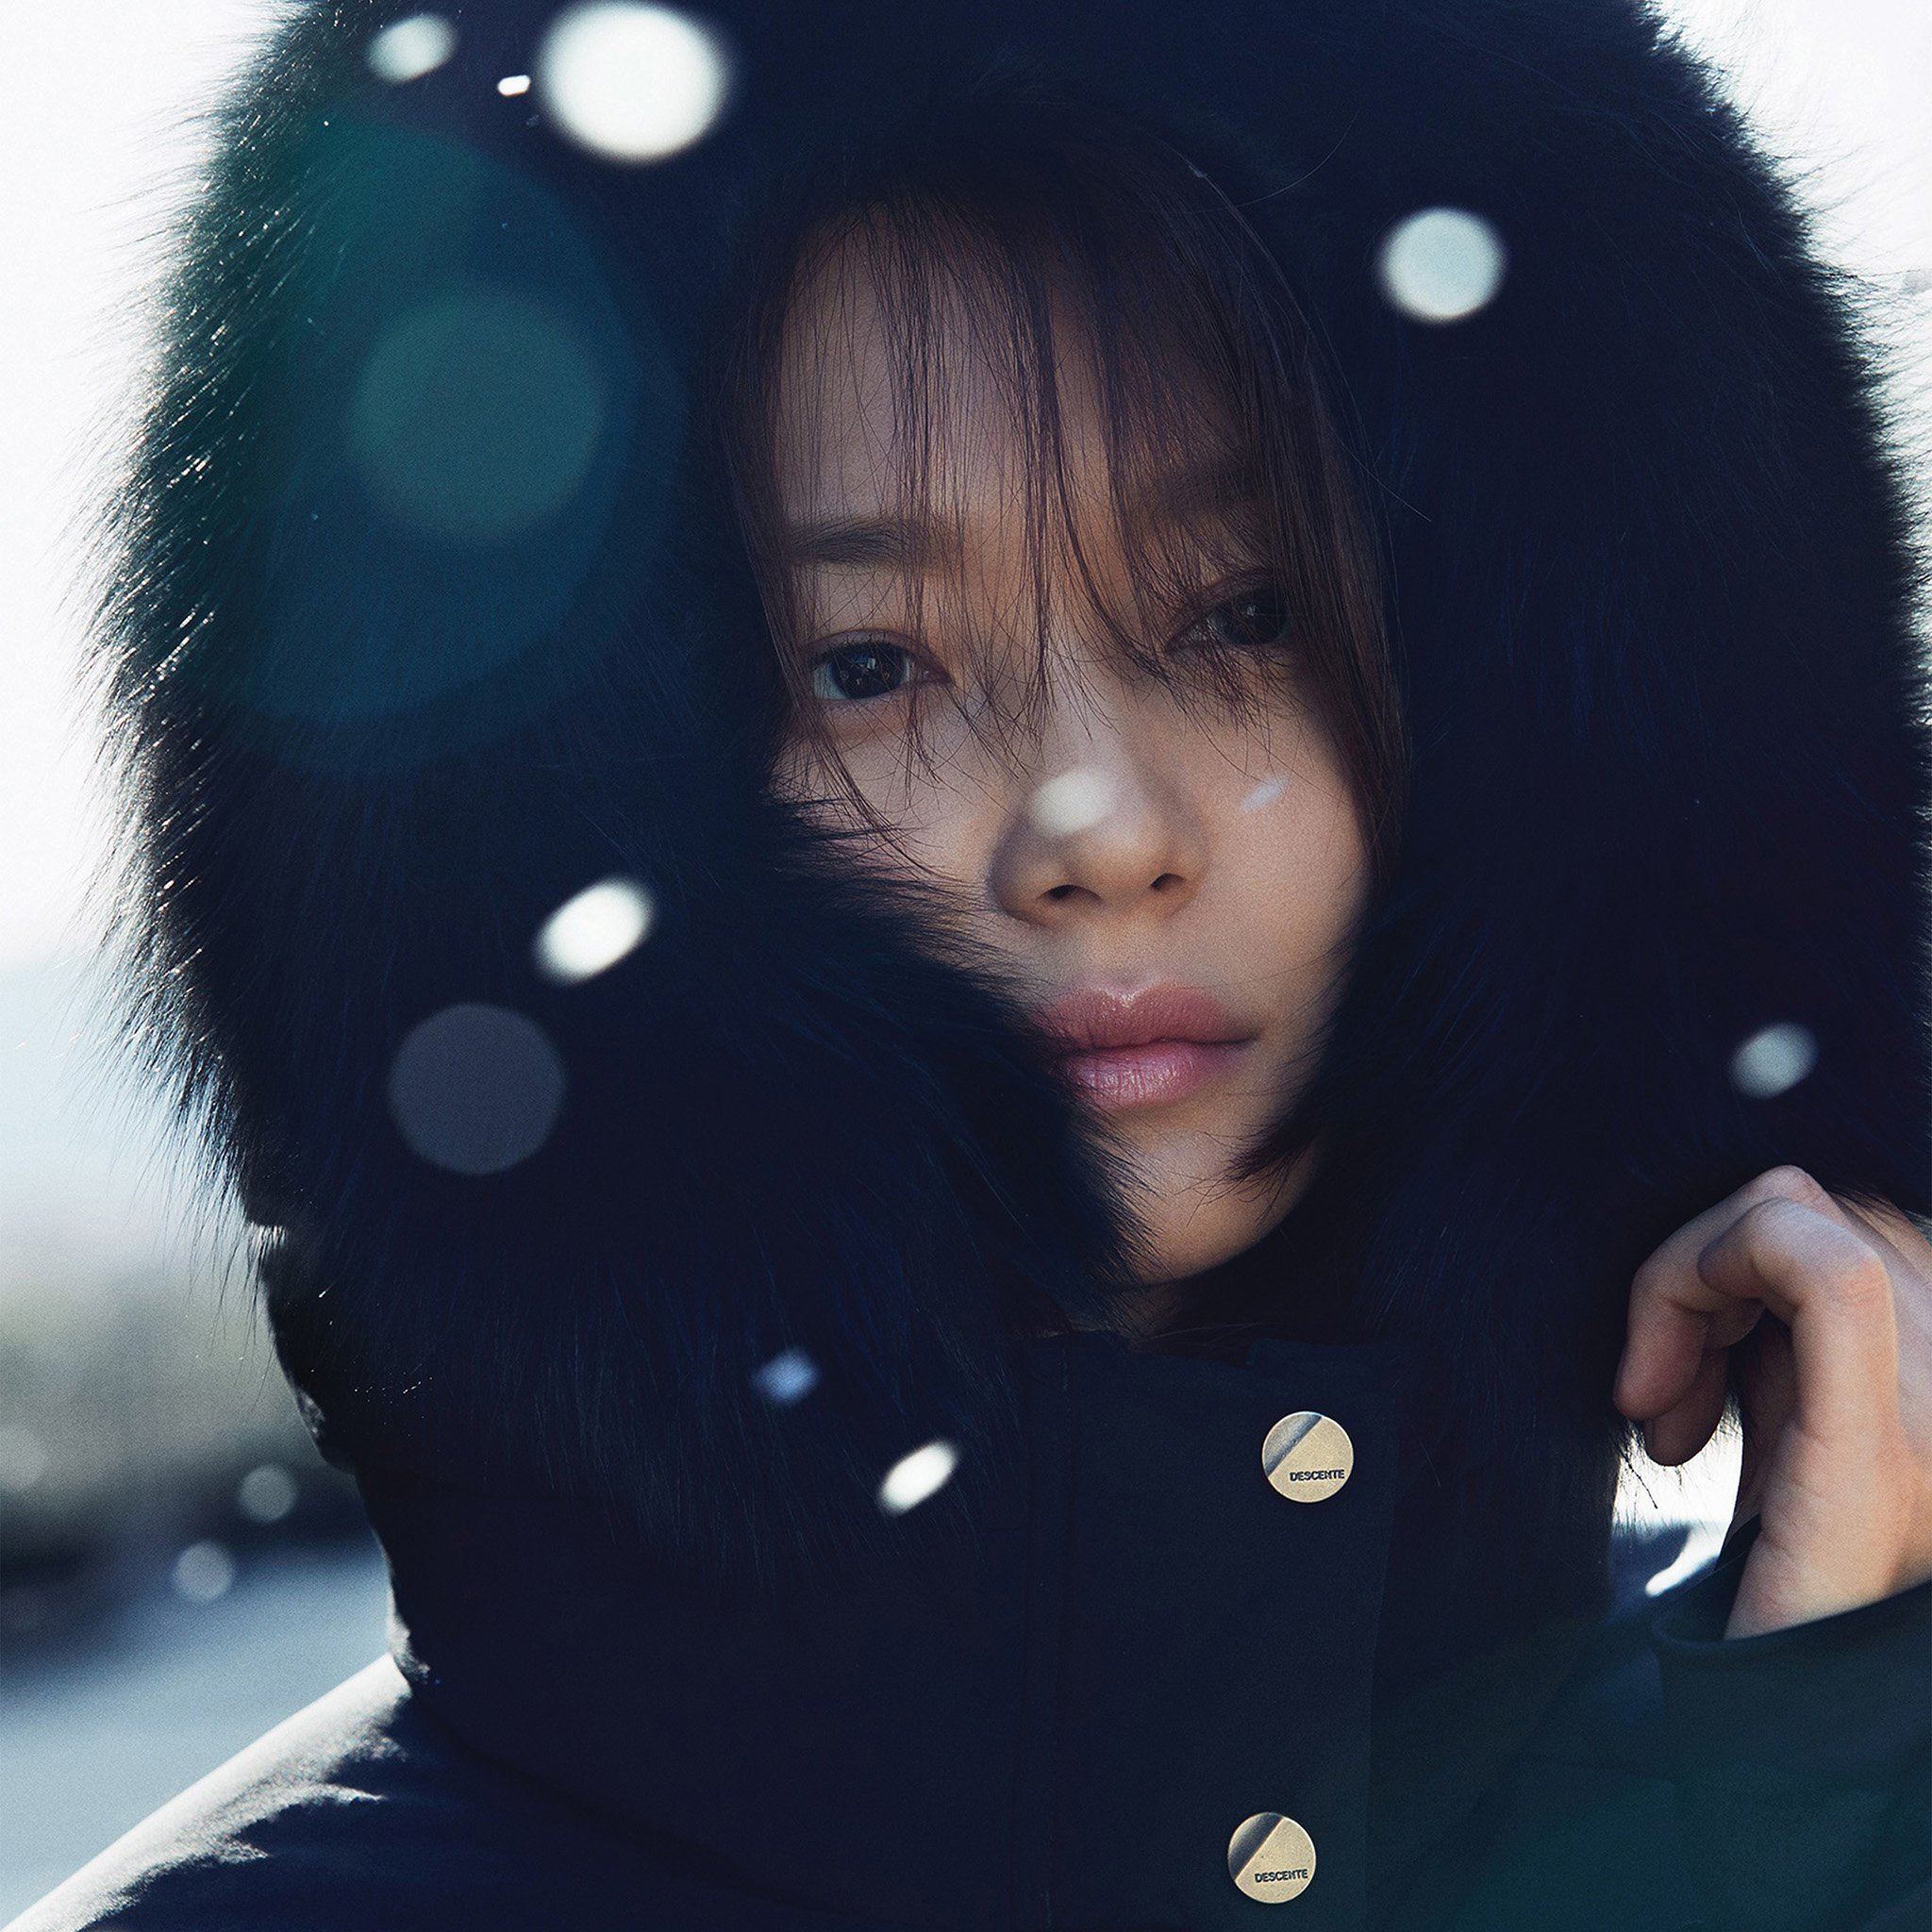 Shin Mina Kpop Winter Snow Celebrity iPad Air wallpaper 